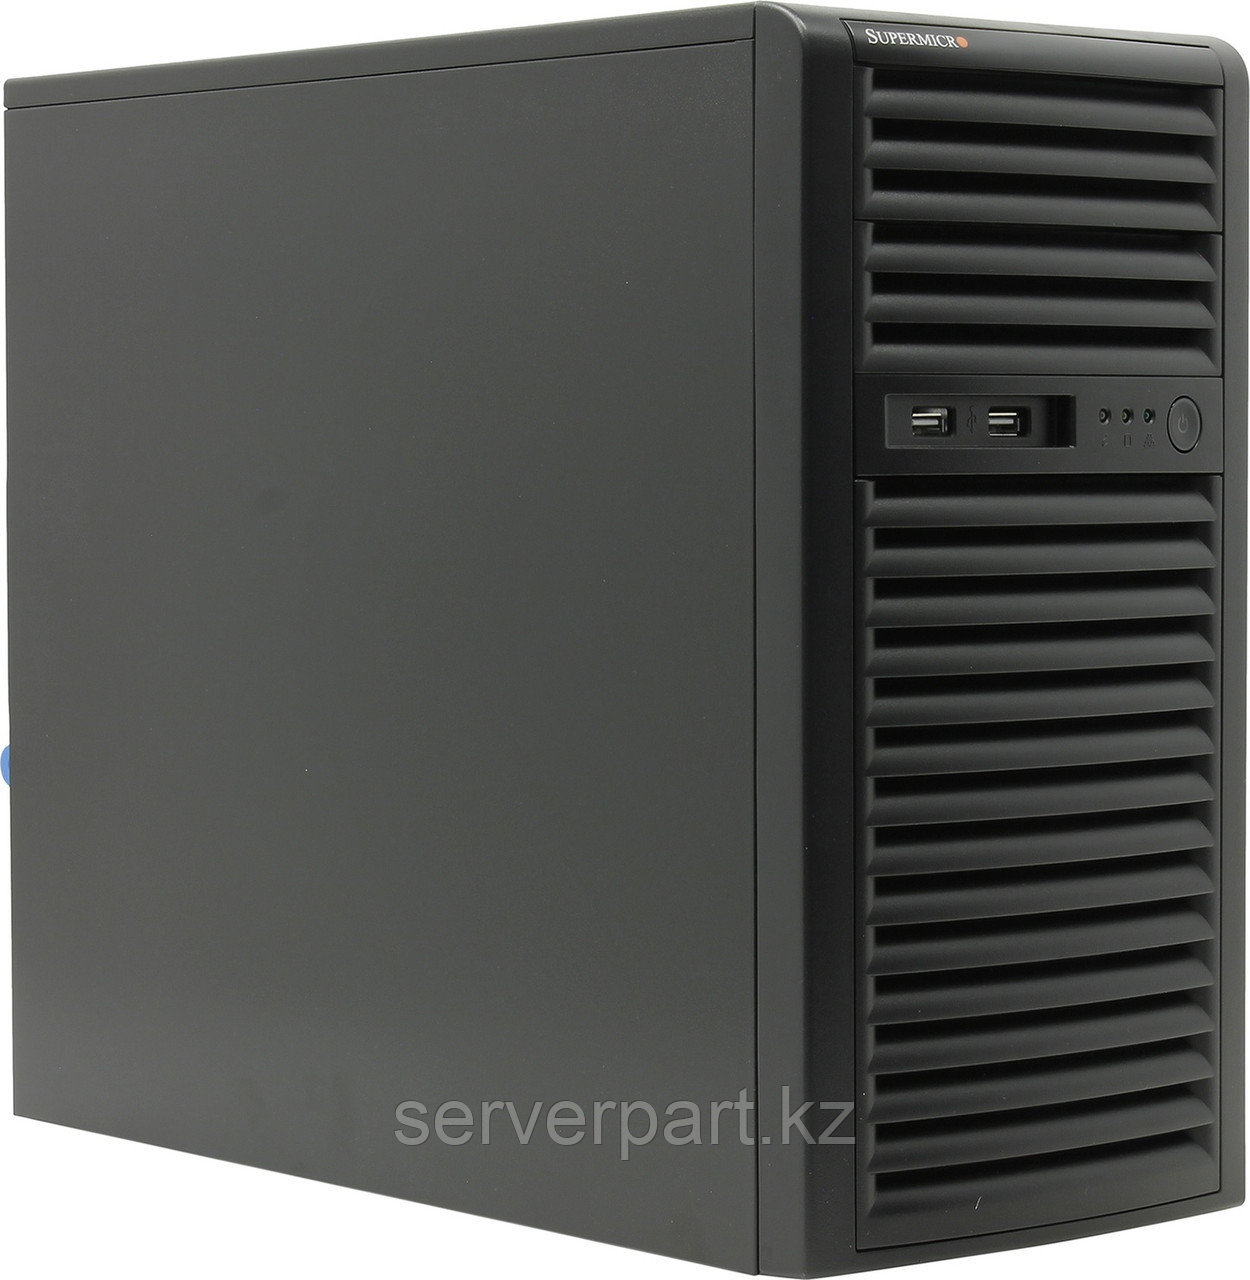 Сервер Supermicro SYS-5039C Tower 4LFF/4-core intel xeon E2124 3.3GHz/16GB EUDIMM/1x480GB SSD RI Hyb, фото 1